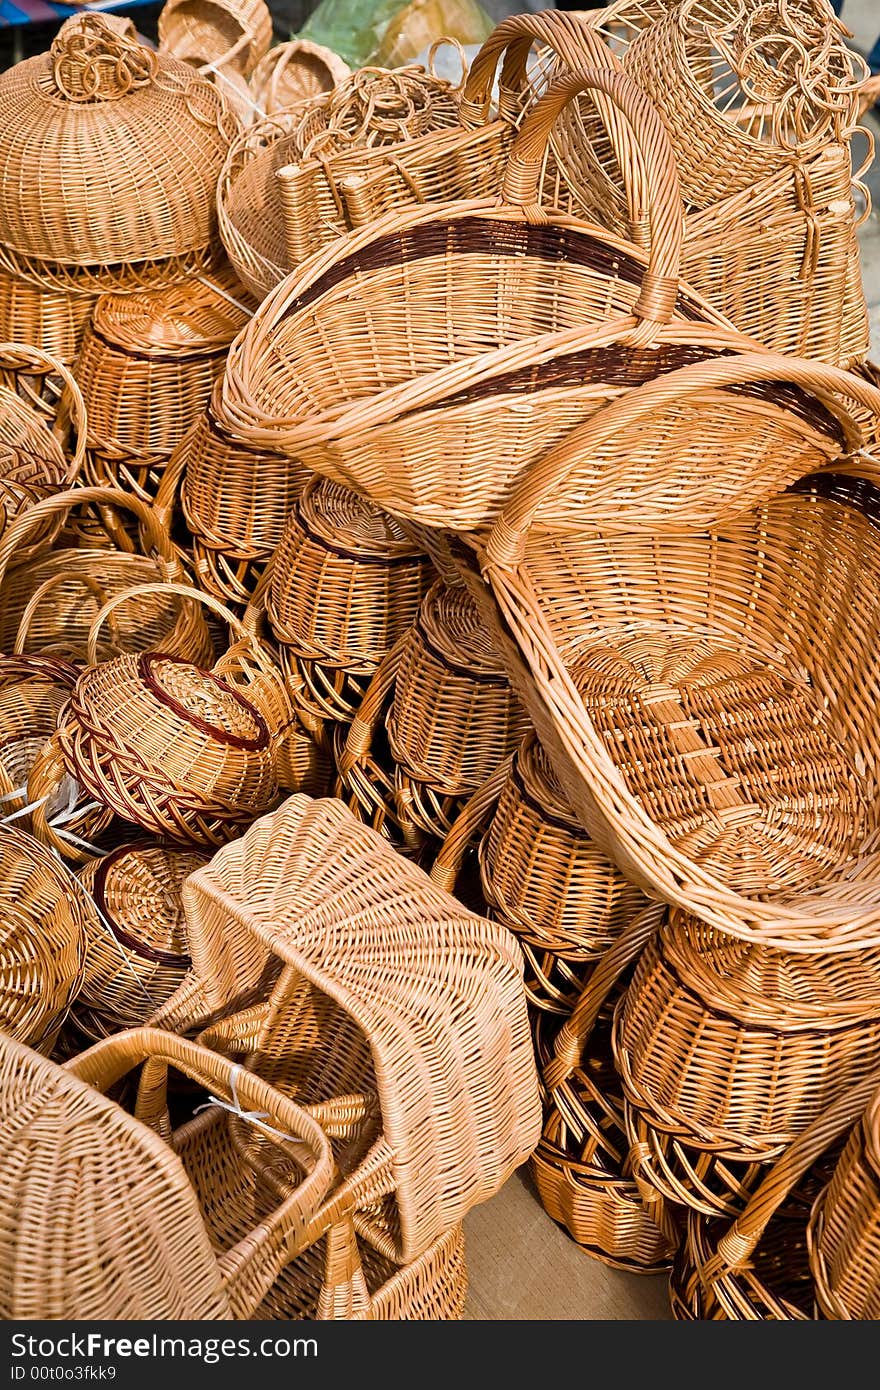 Wicker baskets on the fair